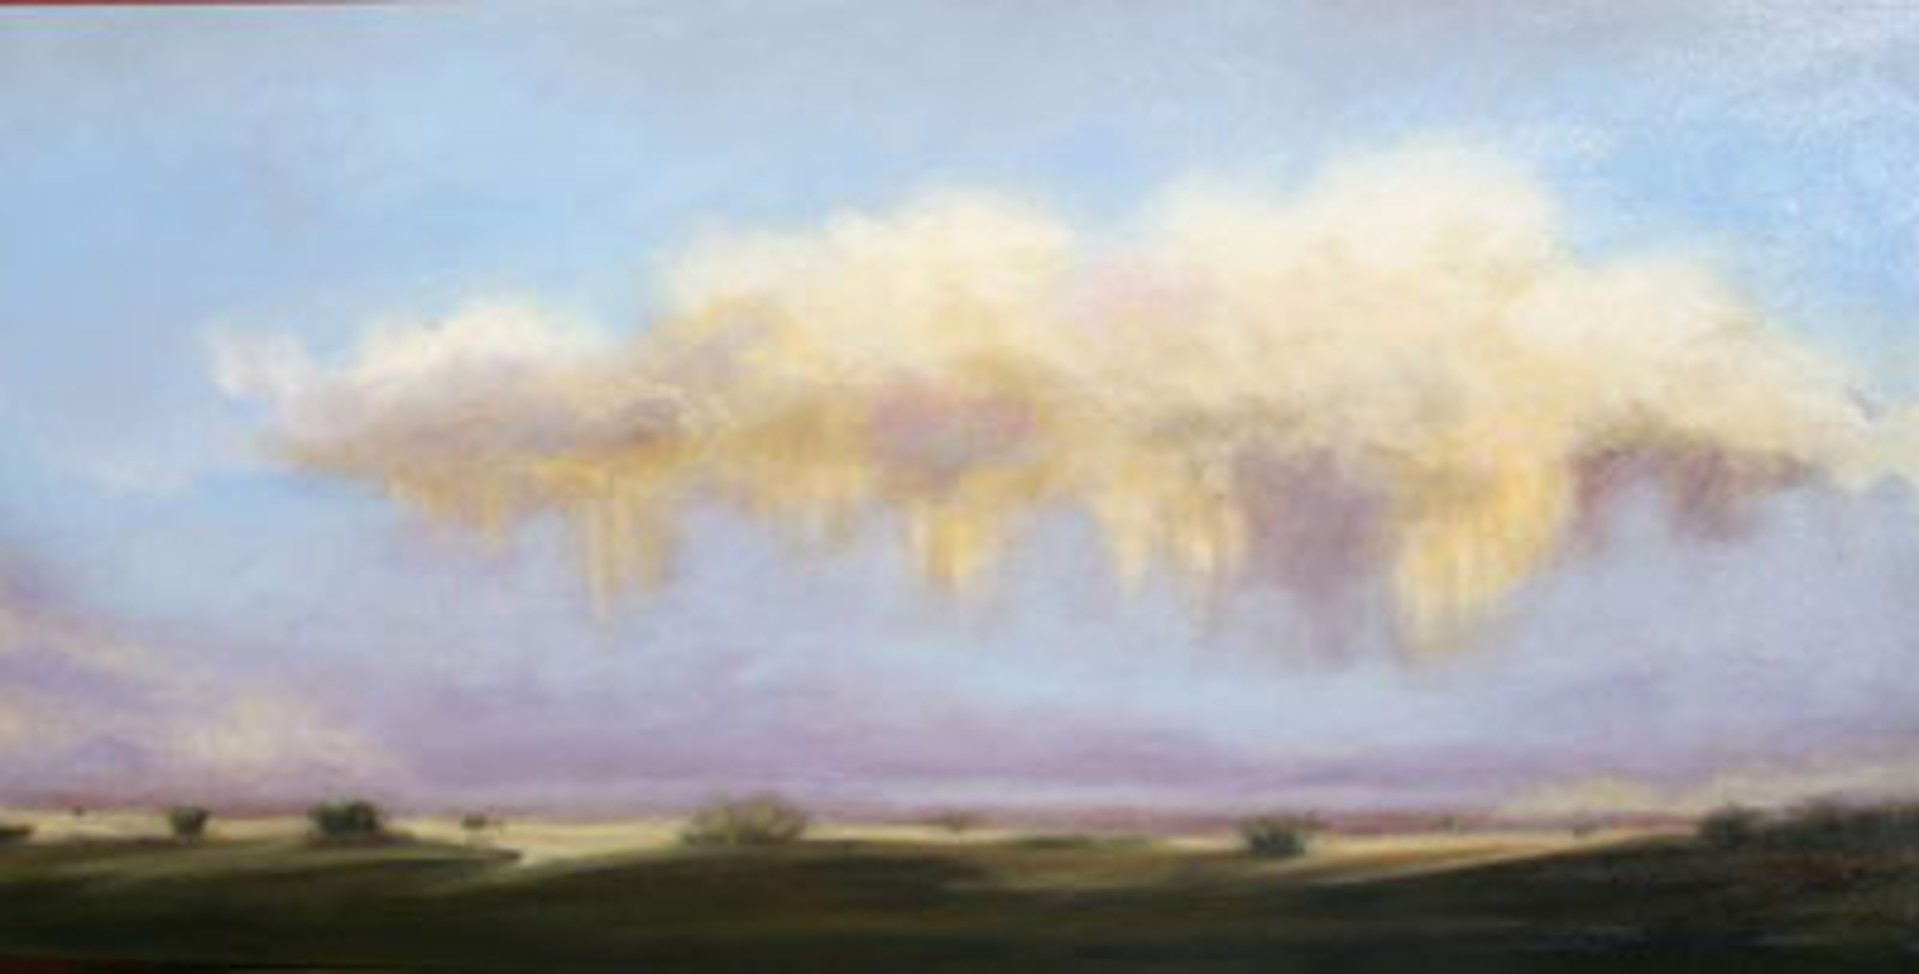 Reflected Light Cloud by Jamie Kirkland